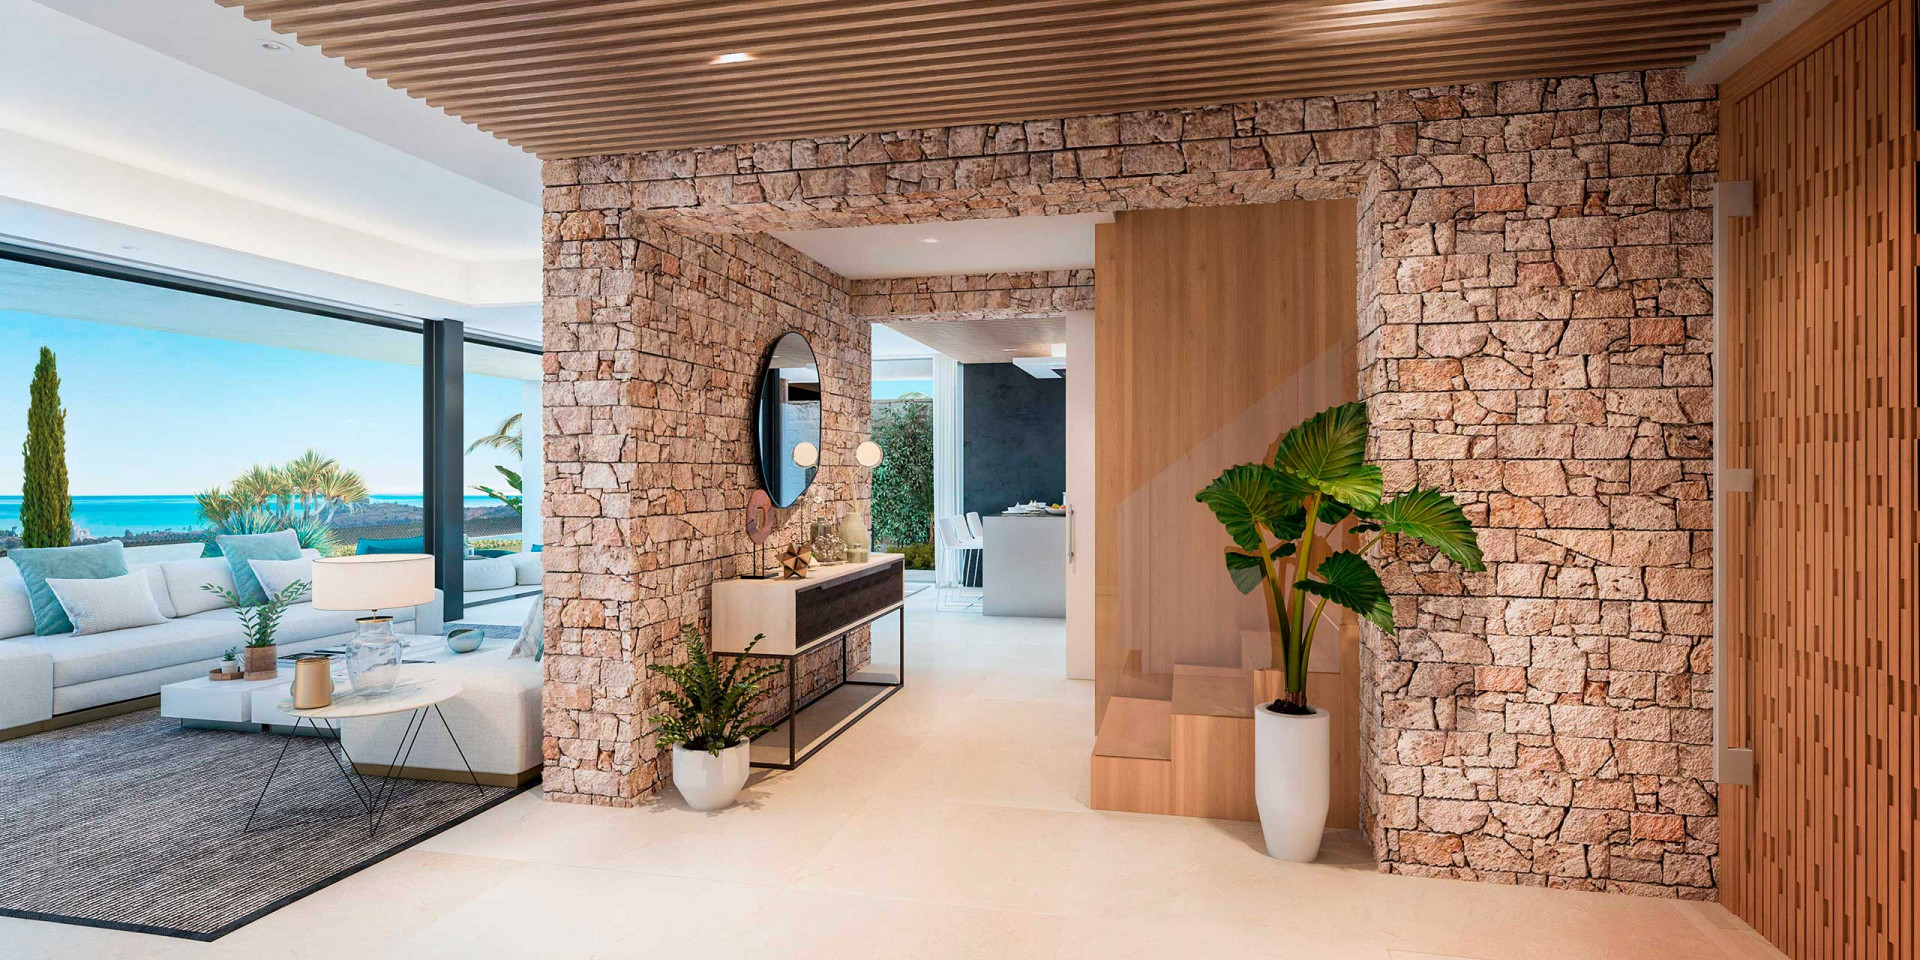 Off plan front line golf luxury contemporary villas for sale in Estepona